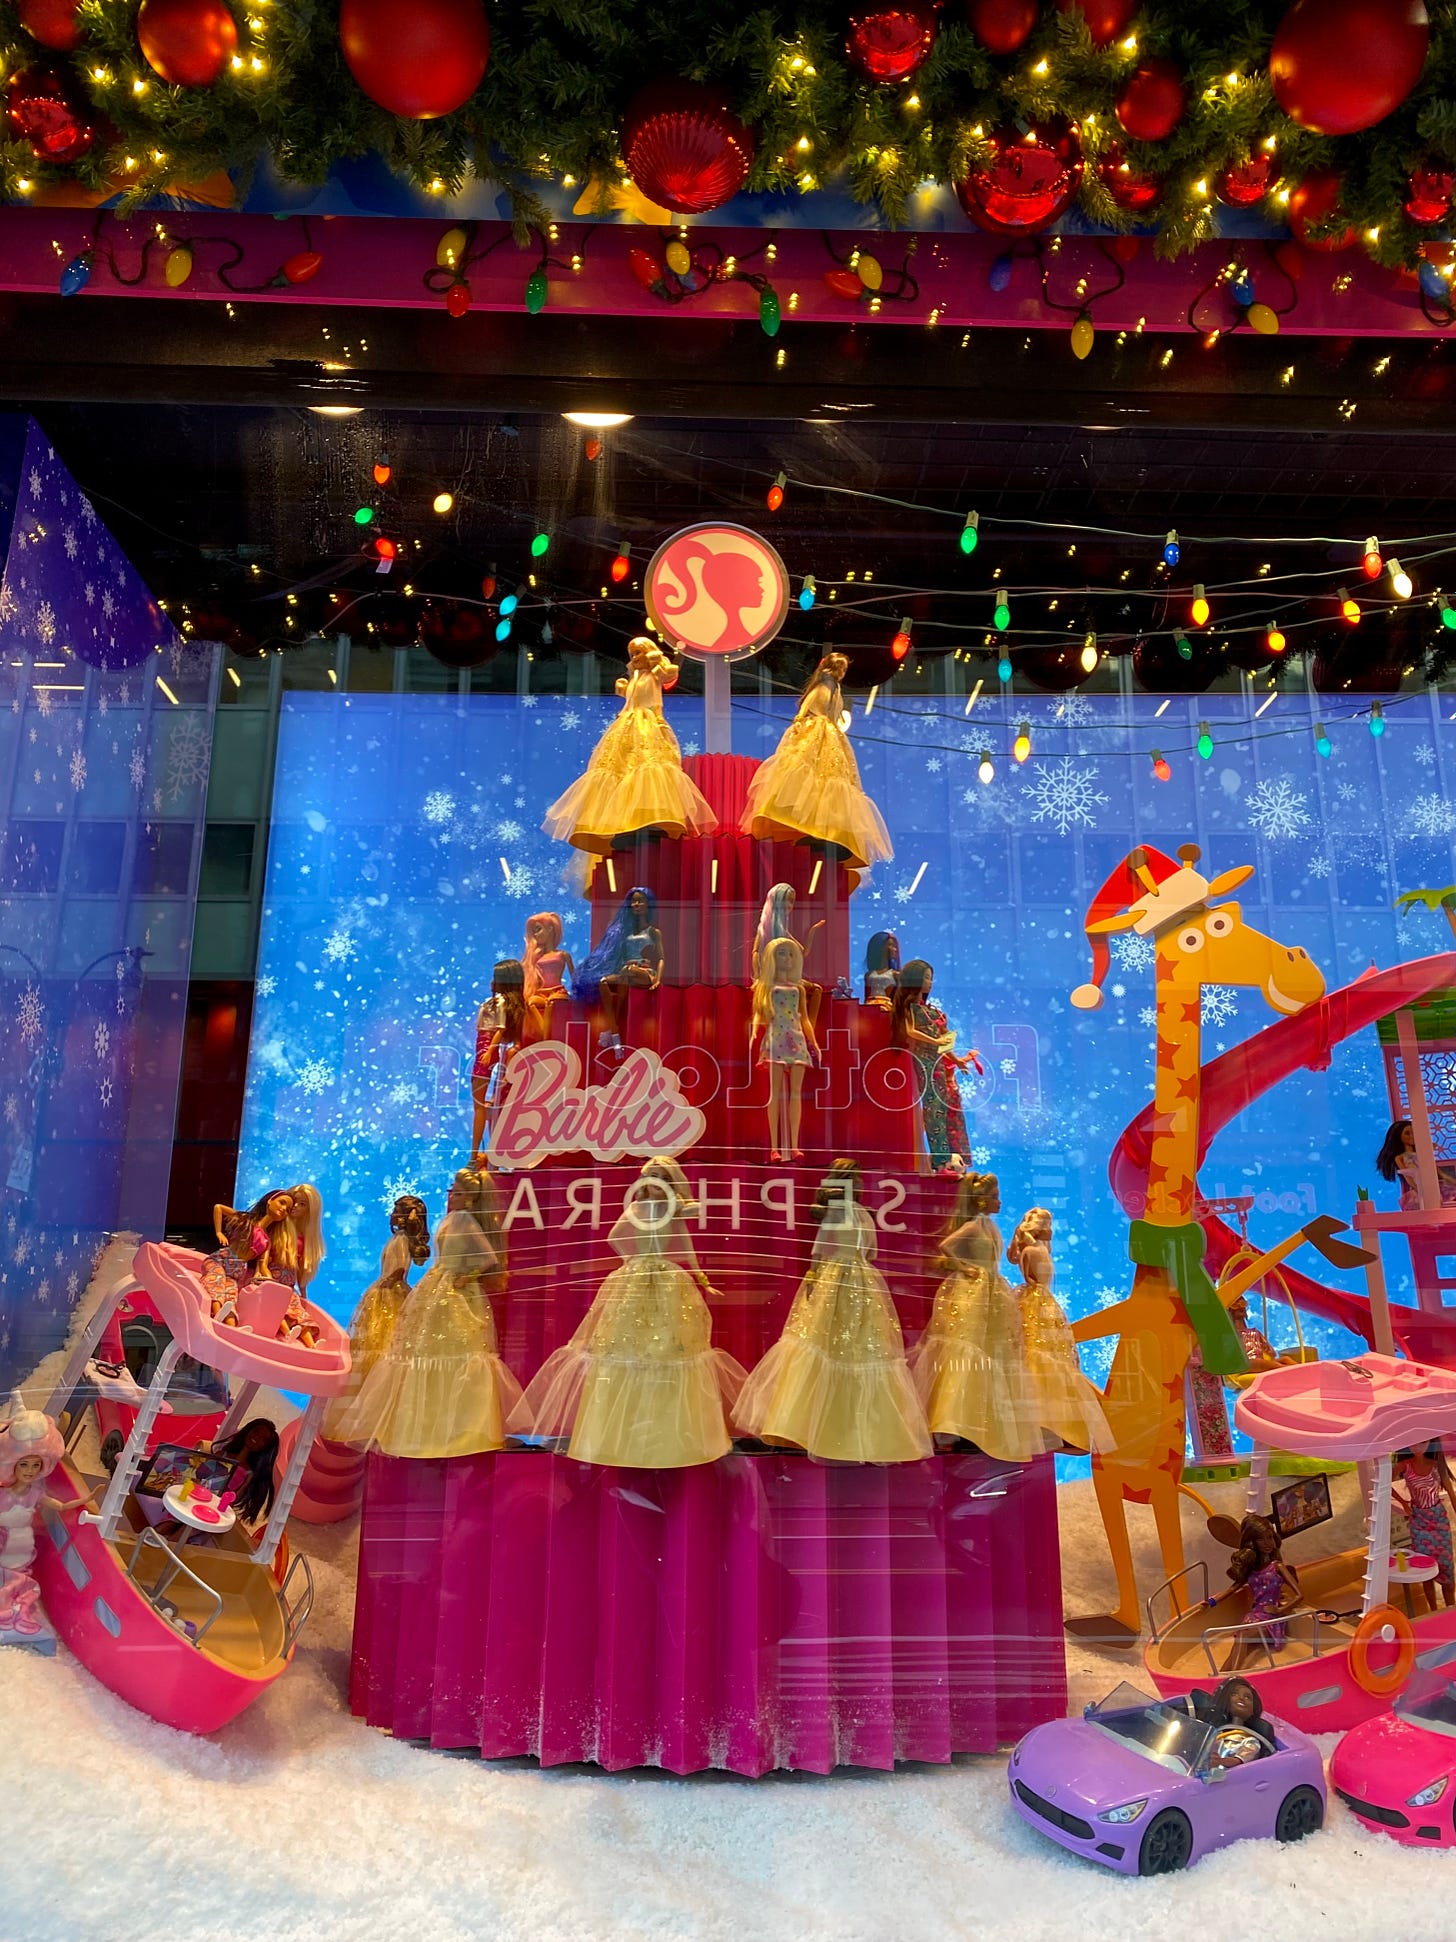 A Barbie-themed Macy's holiday window display.